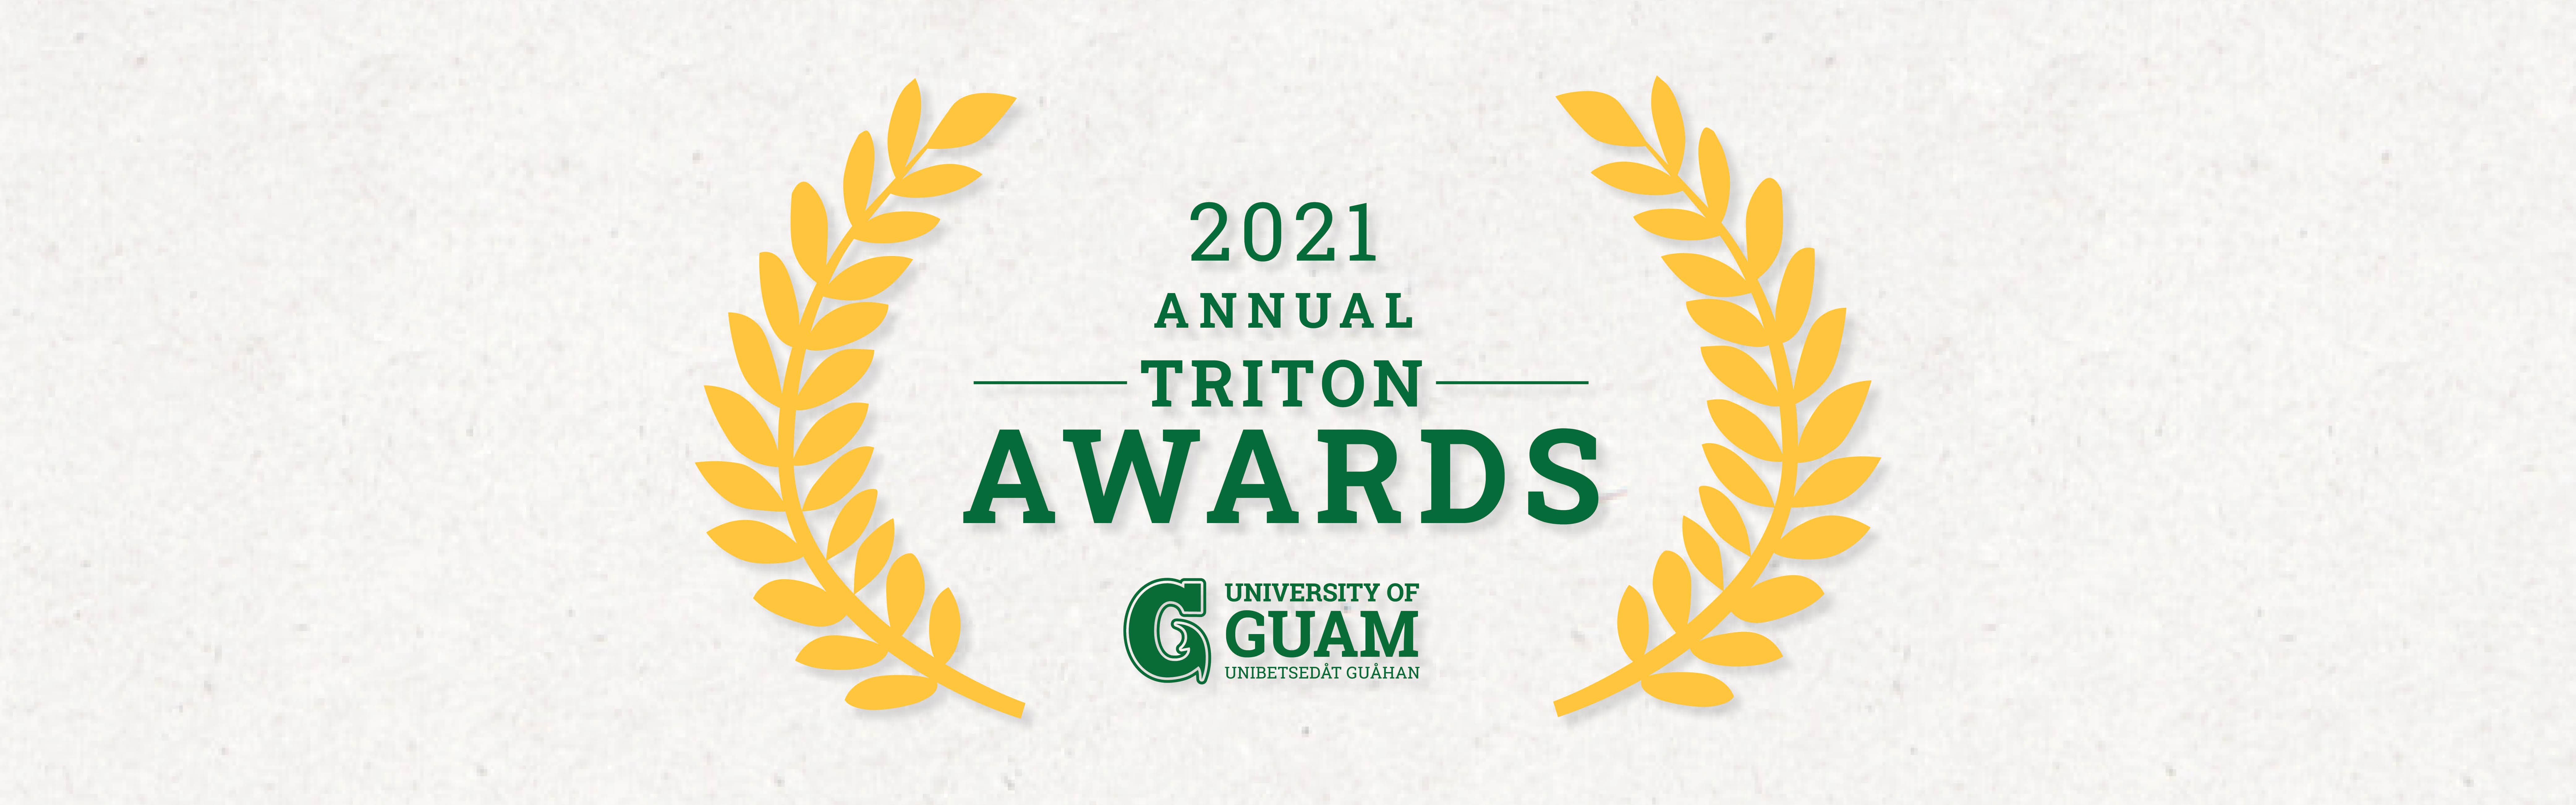 Photo of the Triton Awards logo